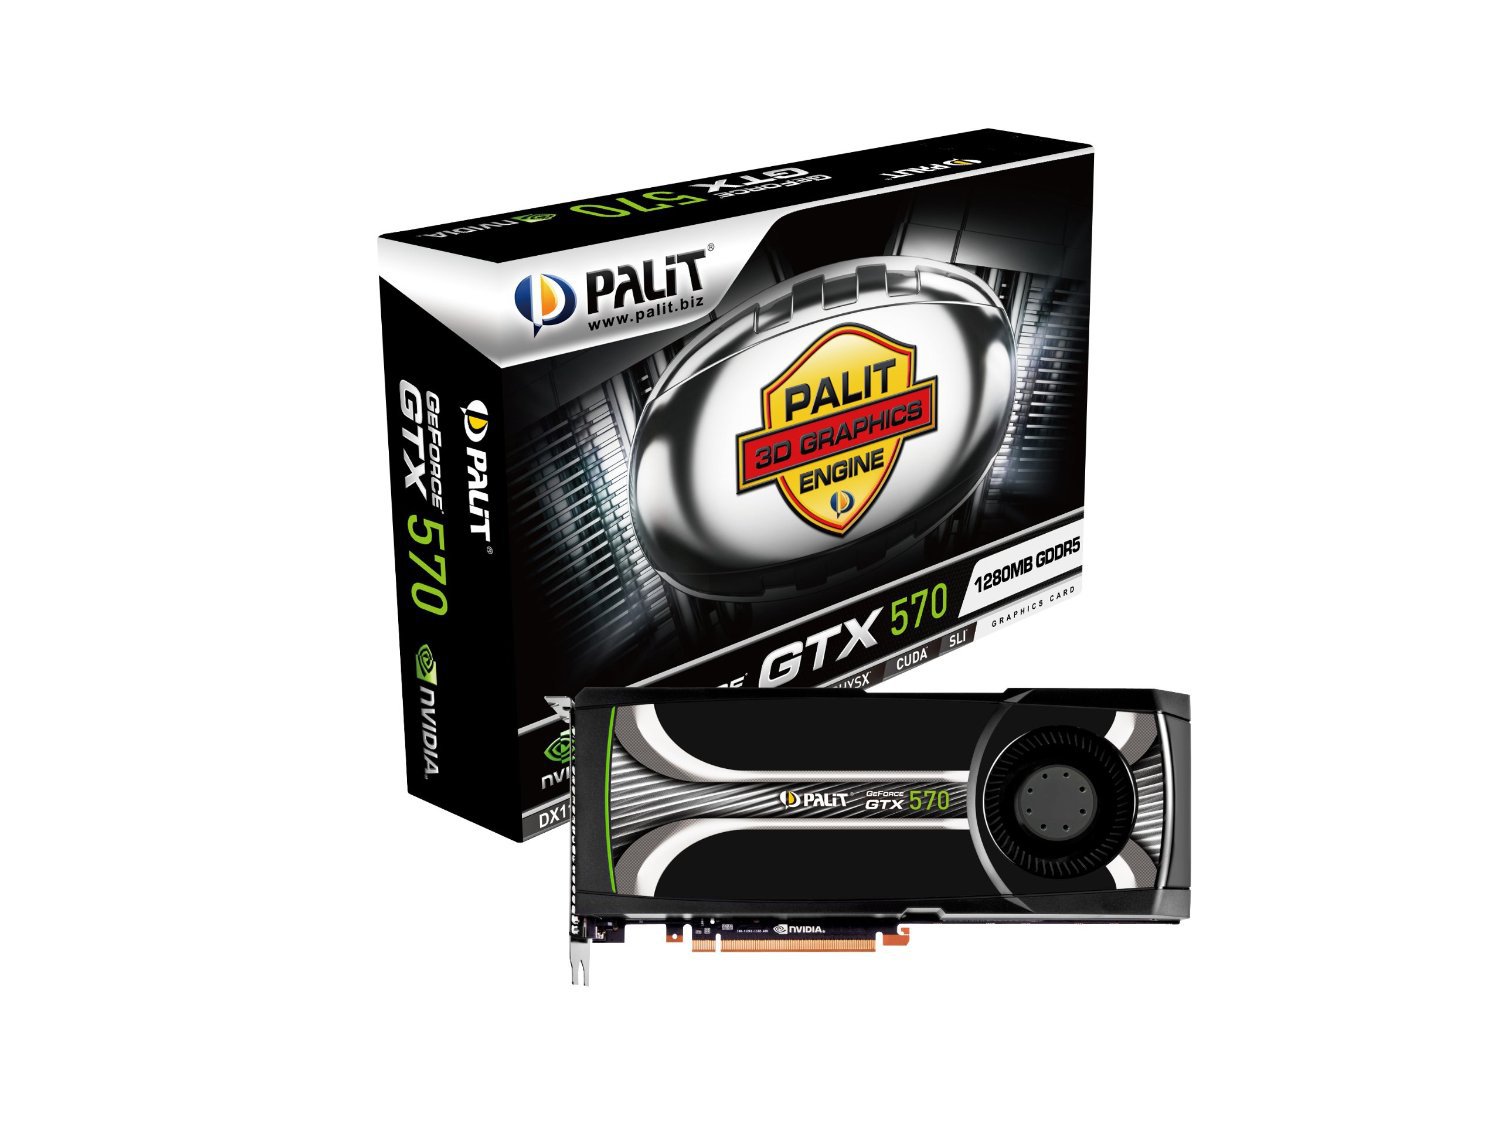 Palit Geforce GTX570 1280mb 320-bit GDDR5 2.0 x 16 HDCP Ready SLI